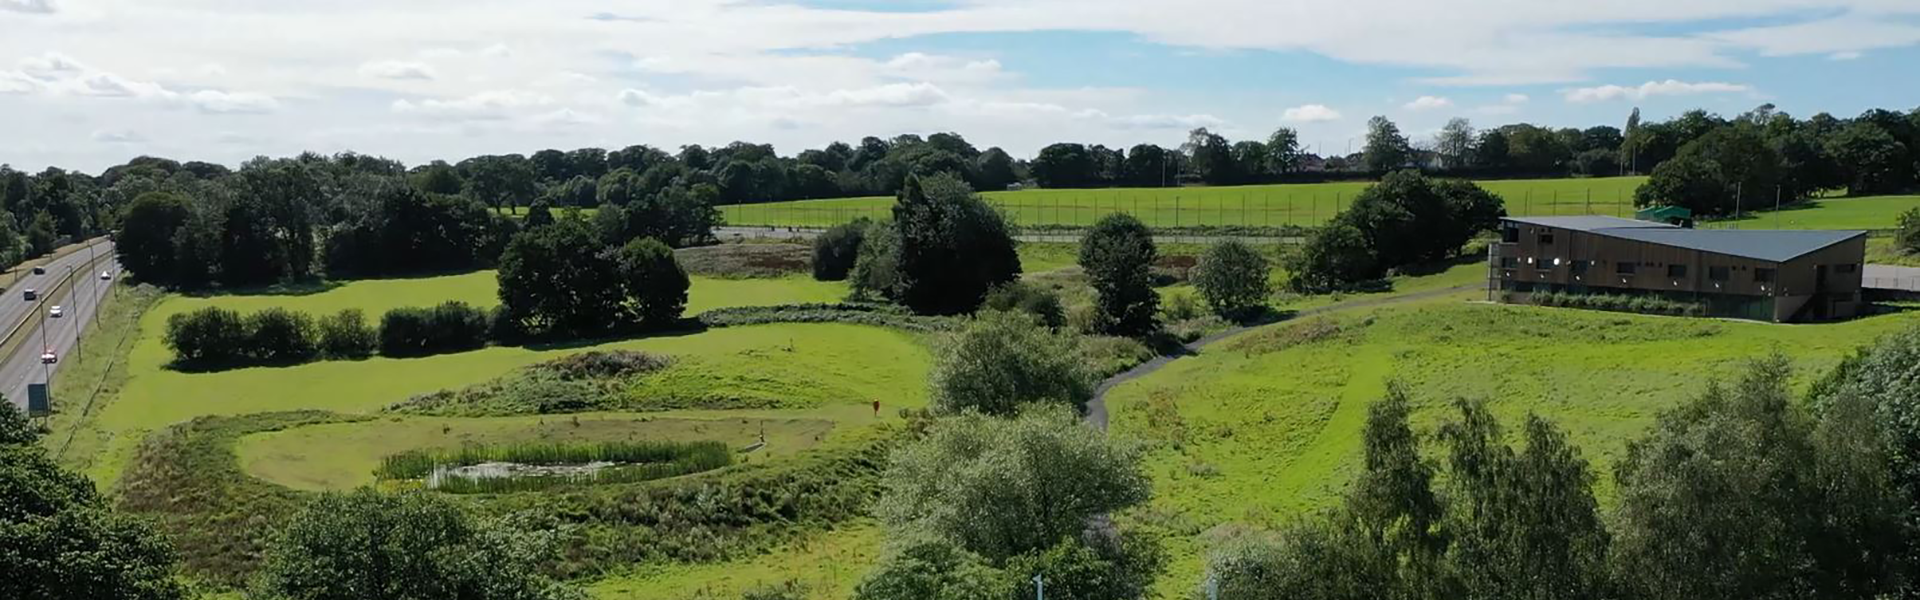 Bodington Fields, drone view